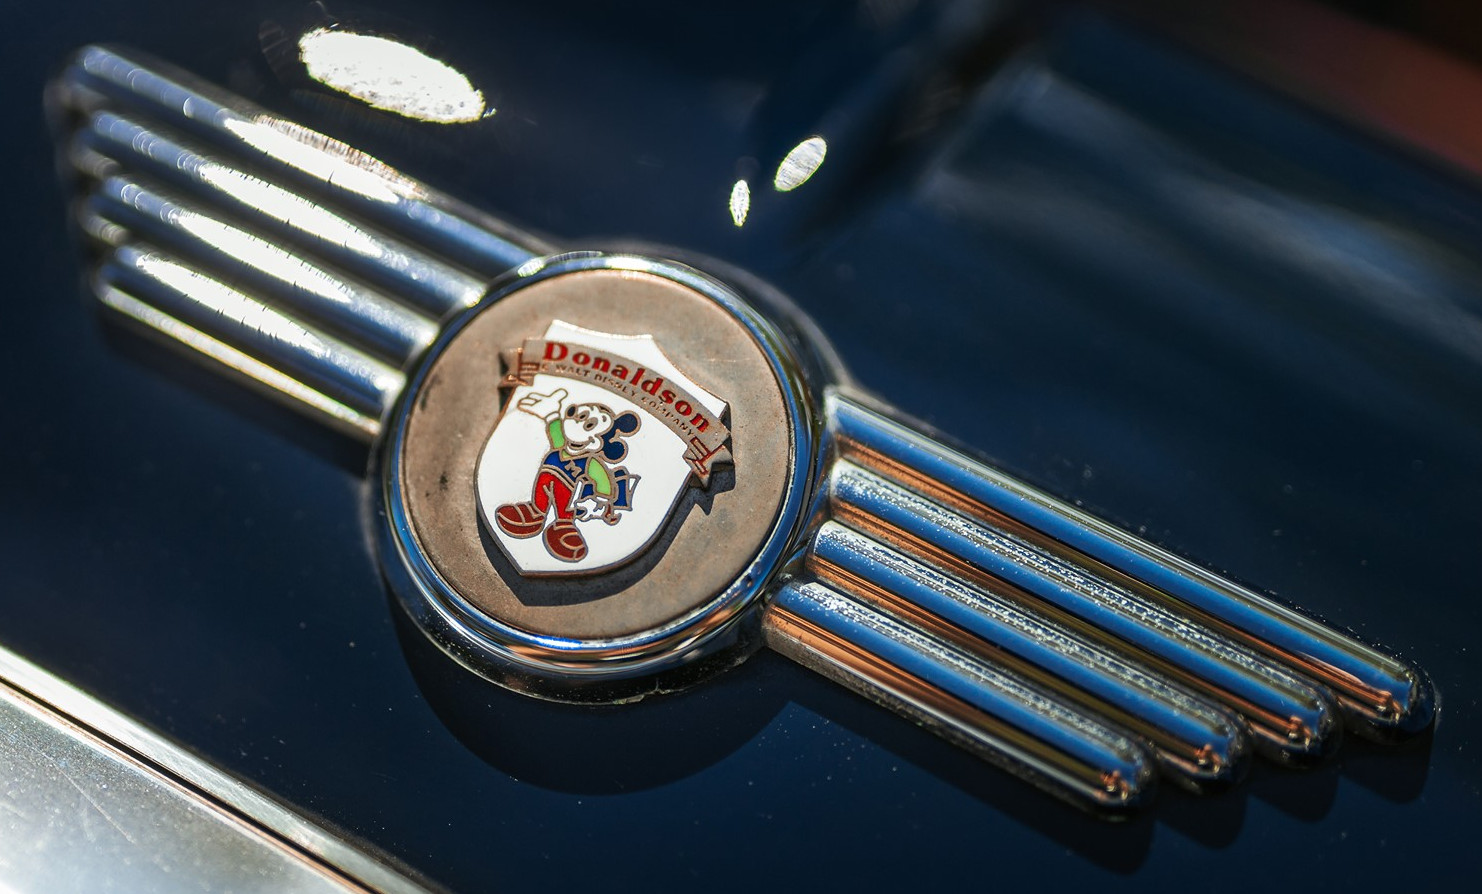 The Donaldson logo on top of the Cooper Mini emblem.